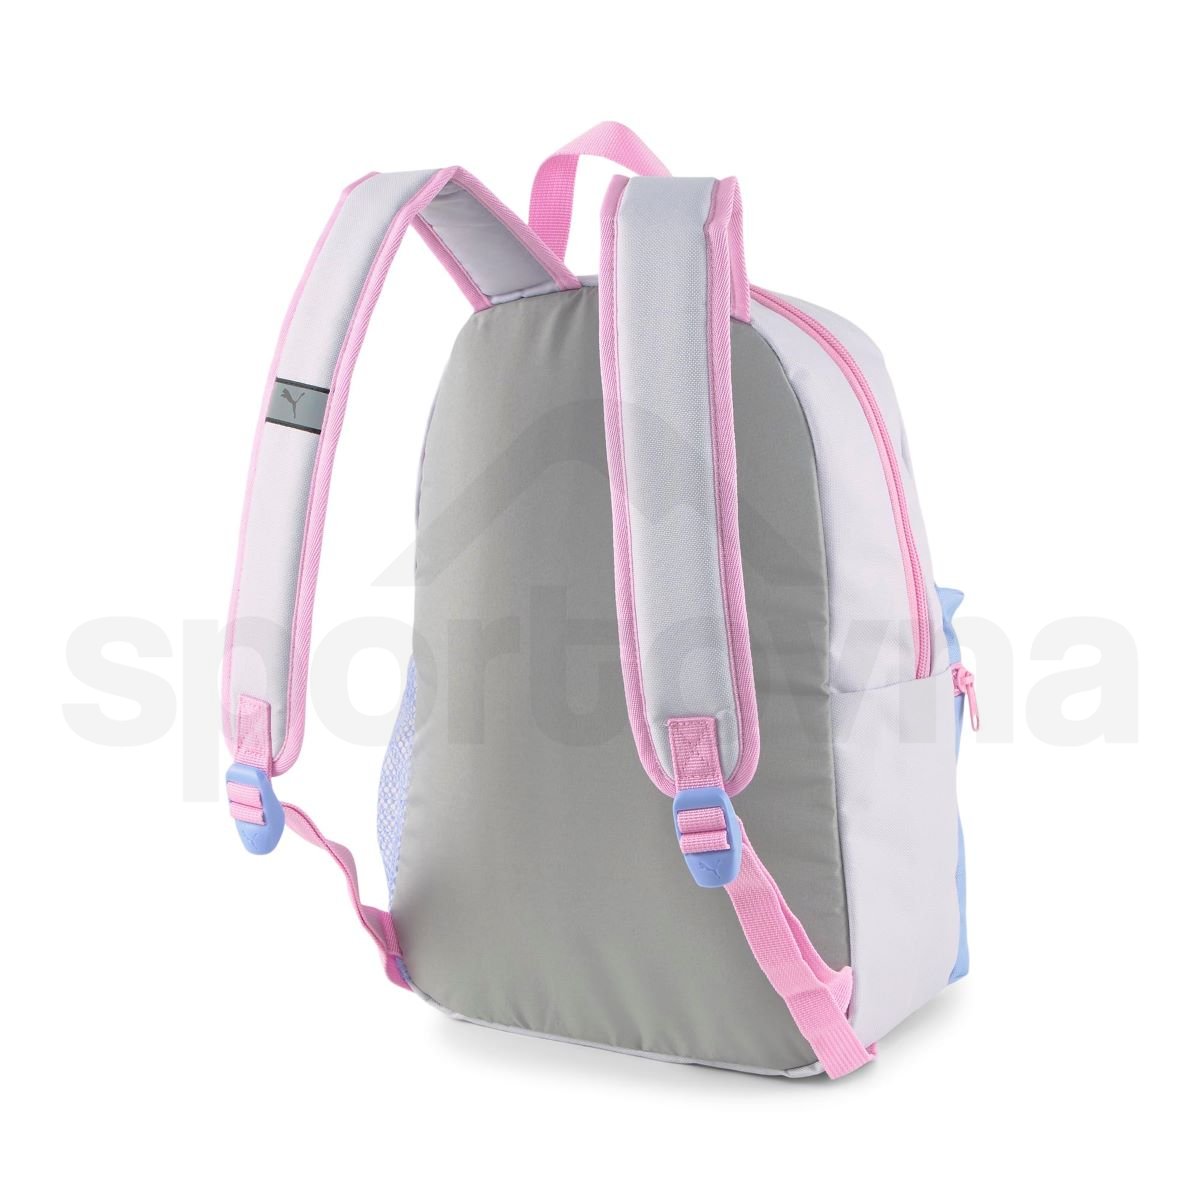 Batoh Puma Phase Small Backpack - modrá/šedá